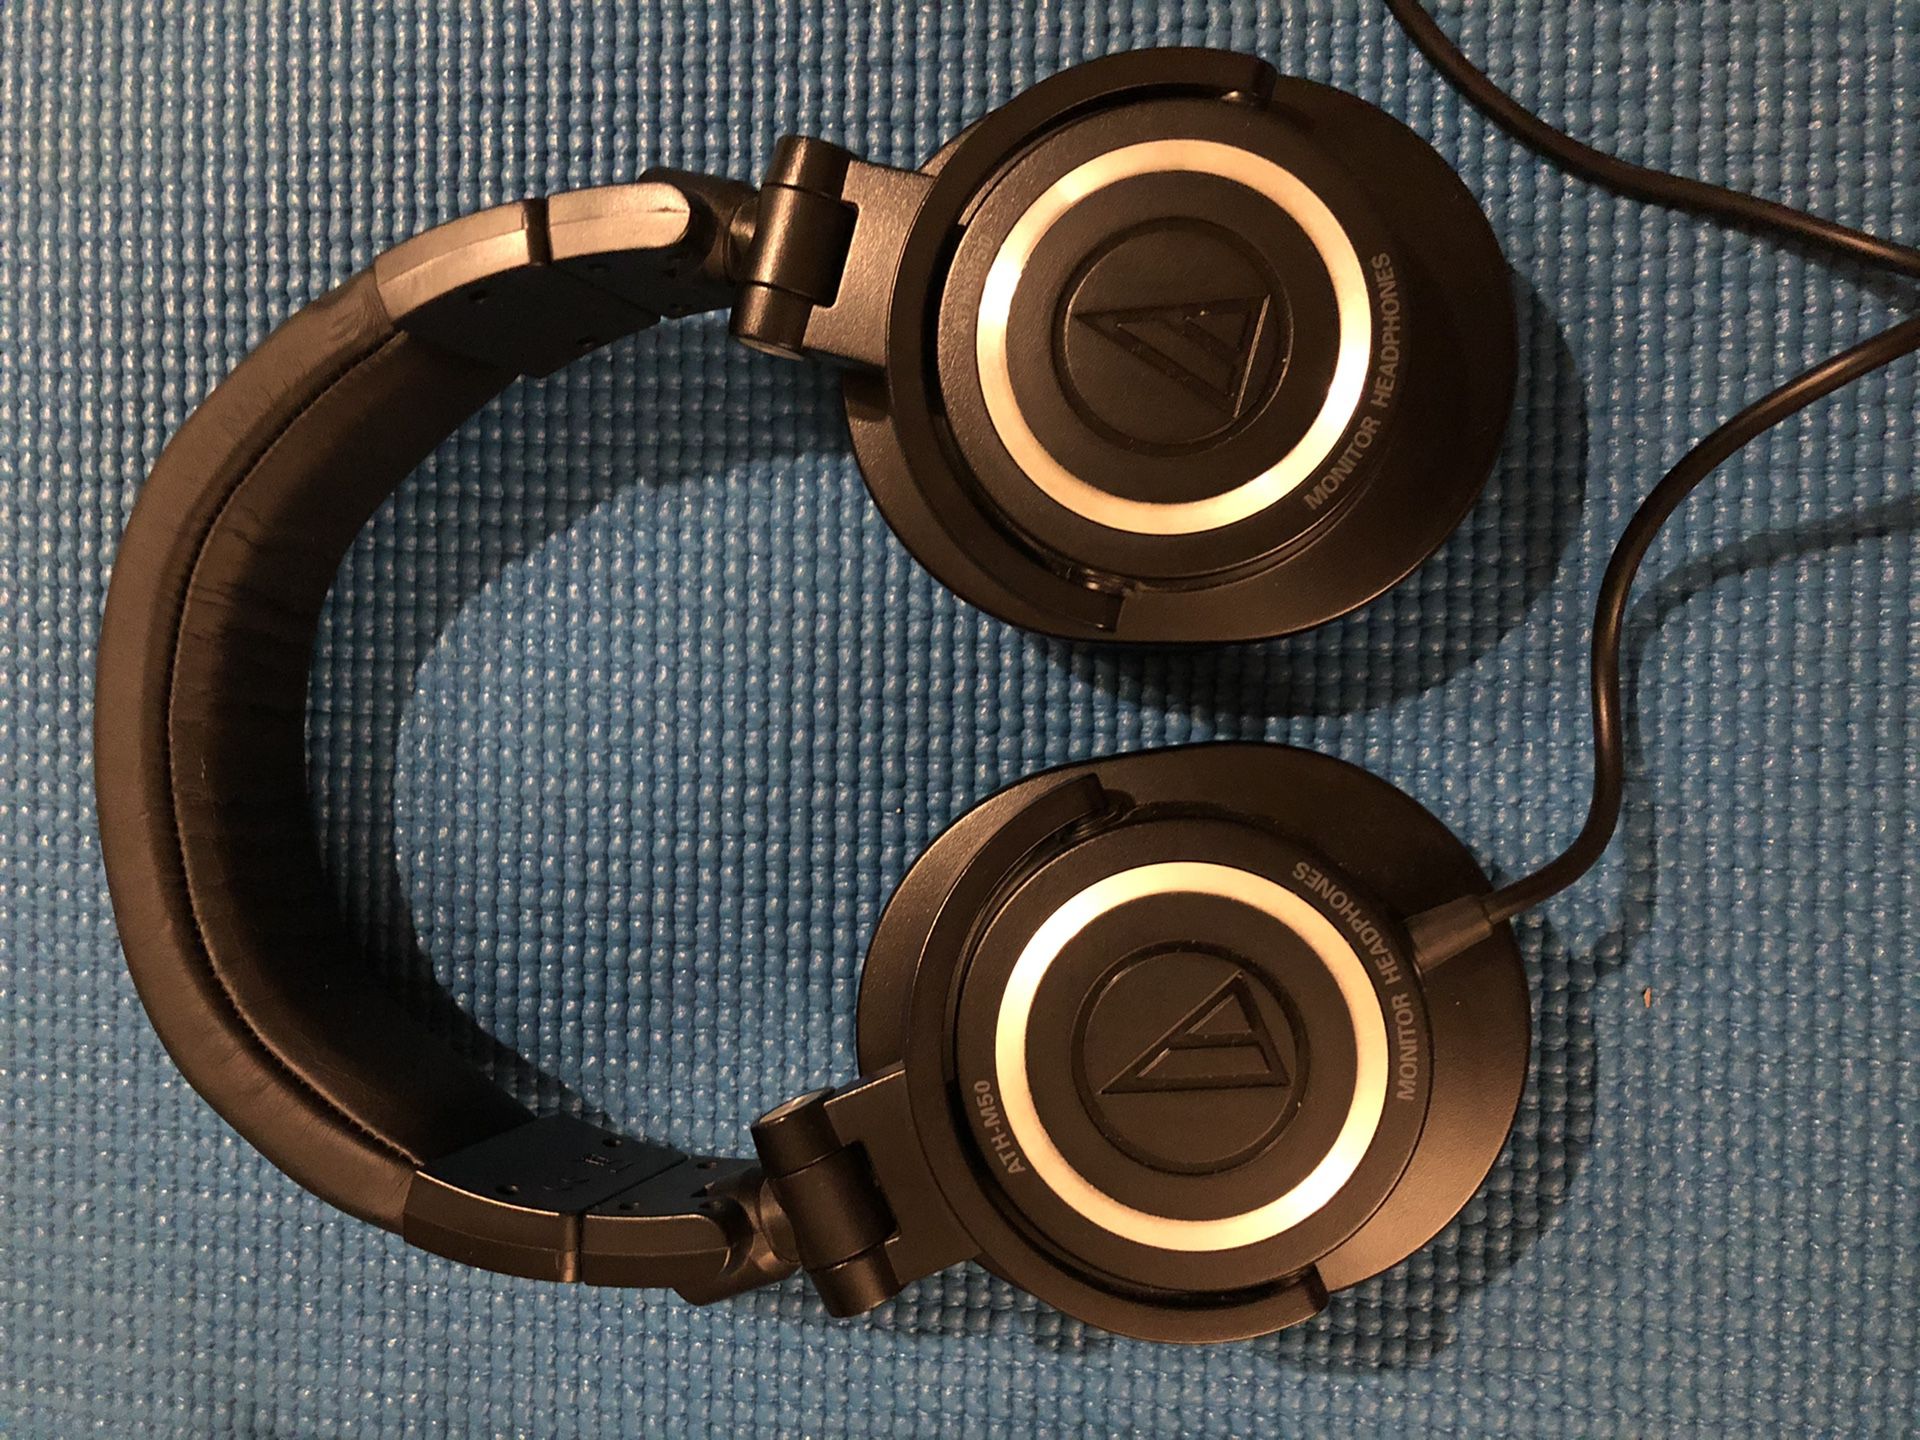 Audio Technical ATH-M50 headphones